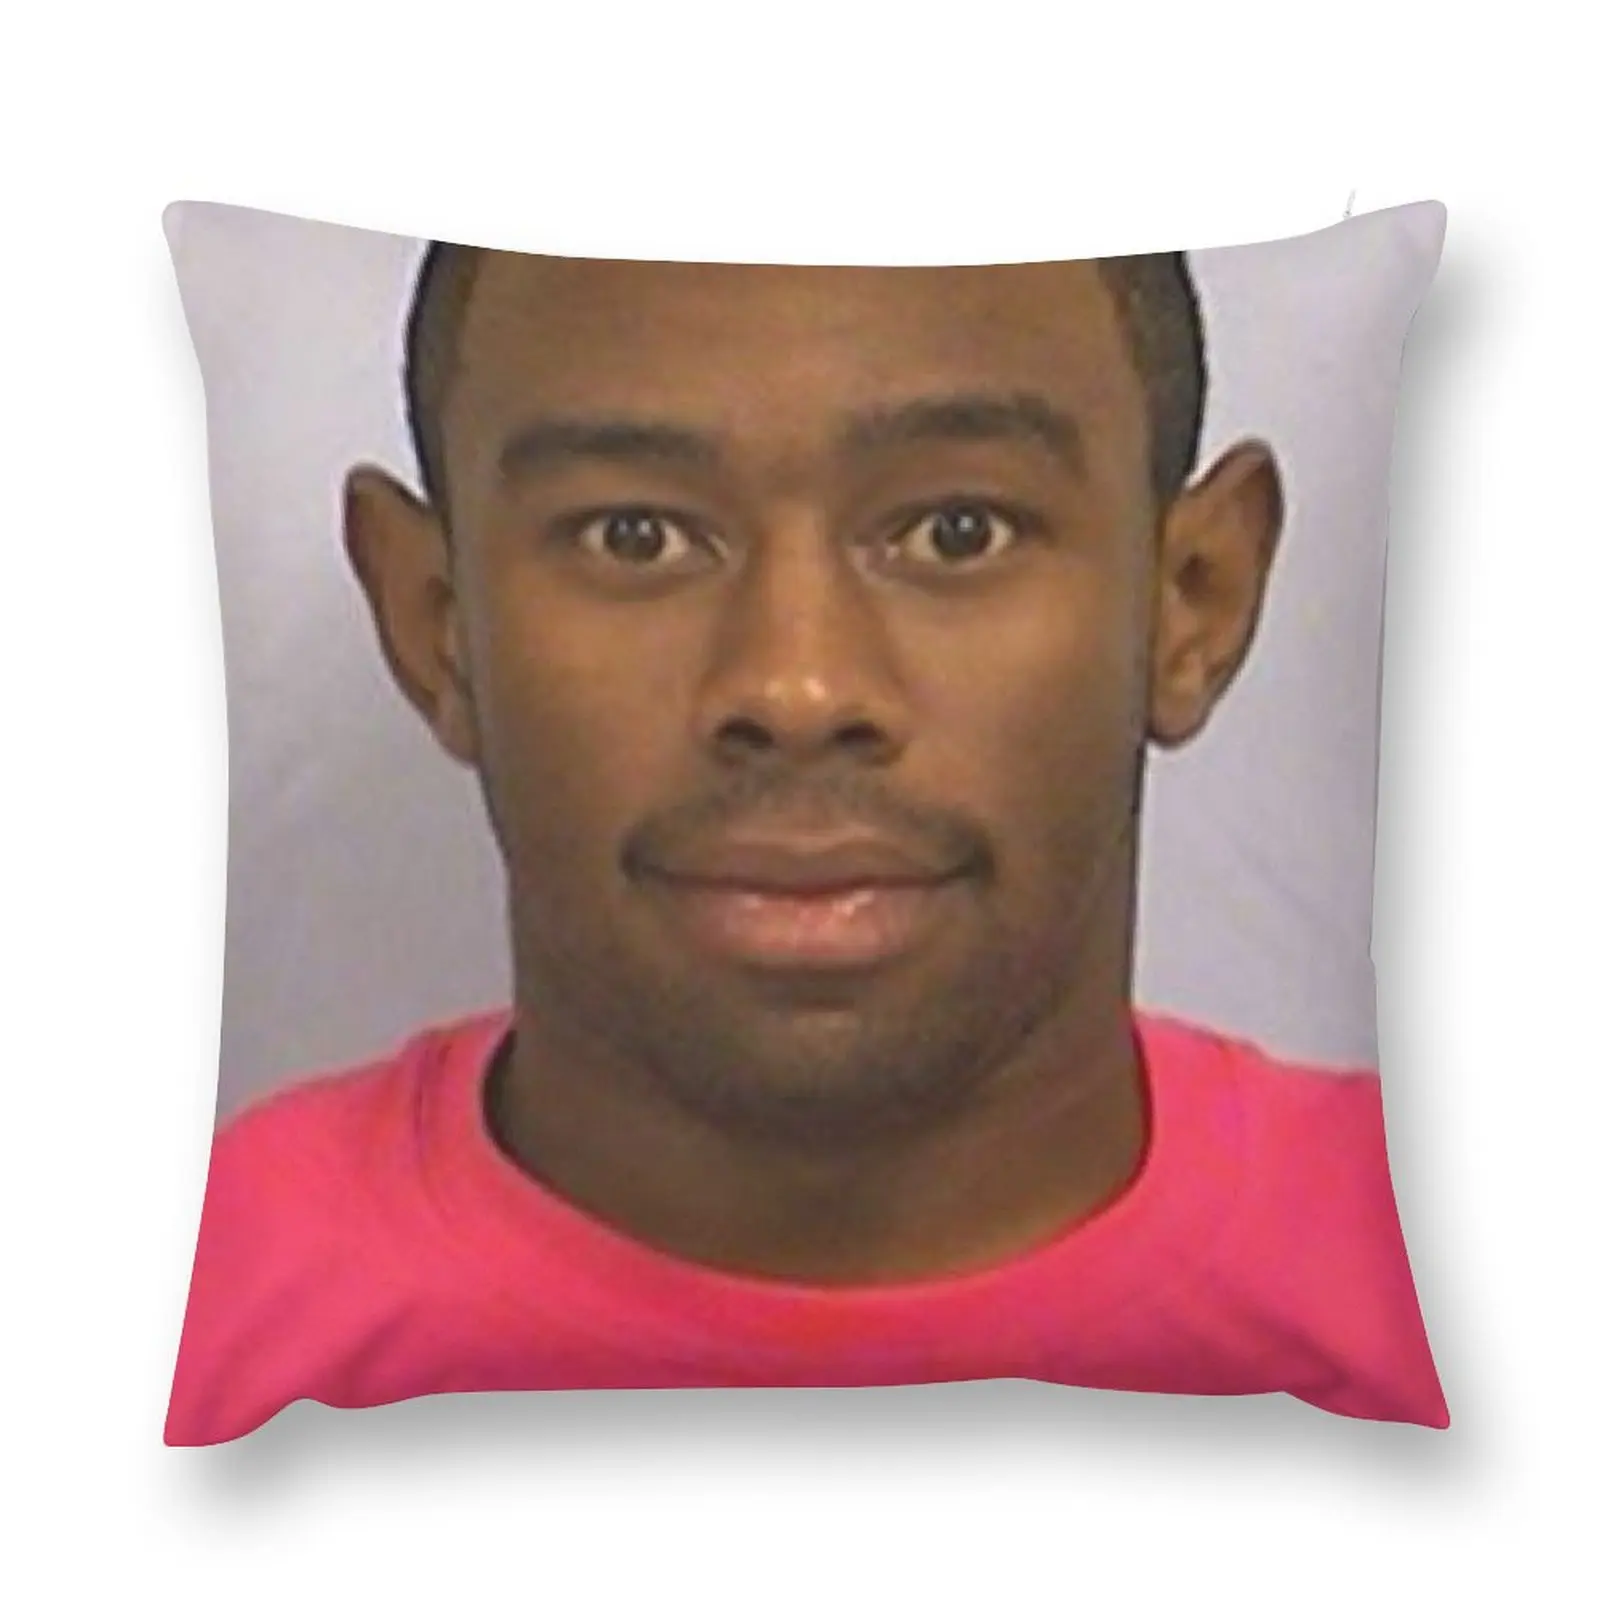 

tyler mugshot Throw Pillow Luxury Cushion Cover Cushions Pillows Aesthetic